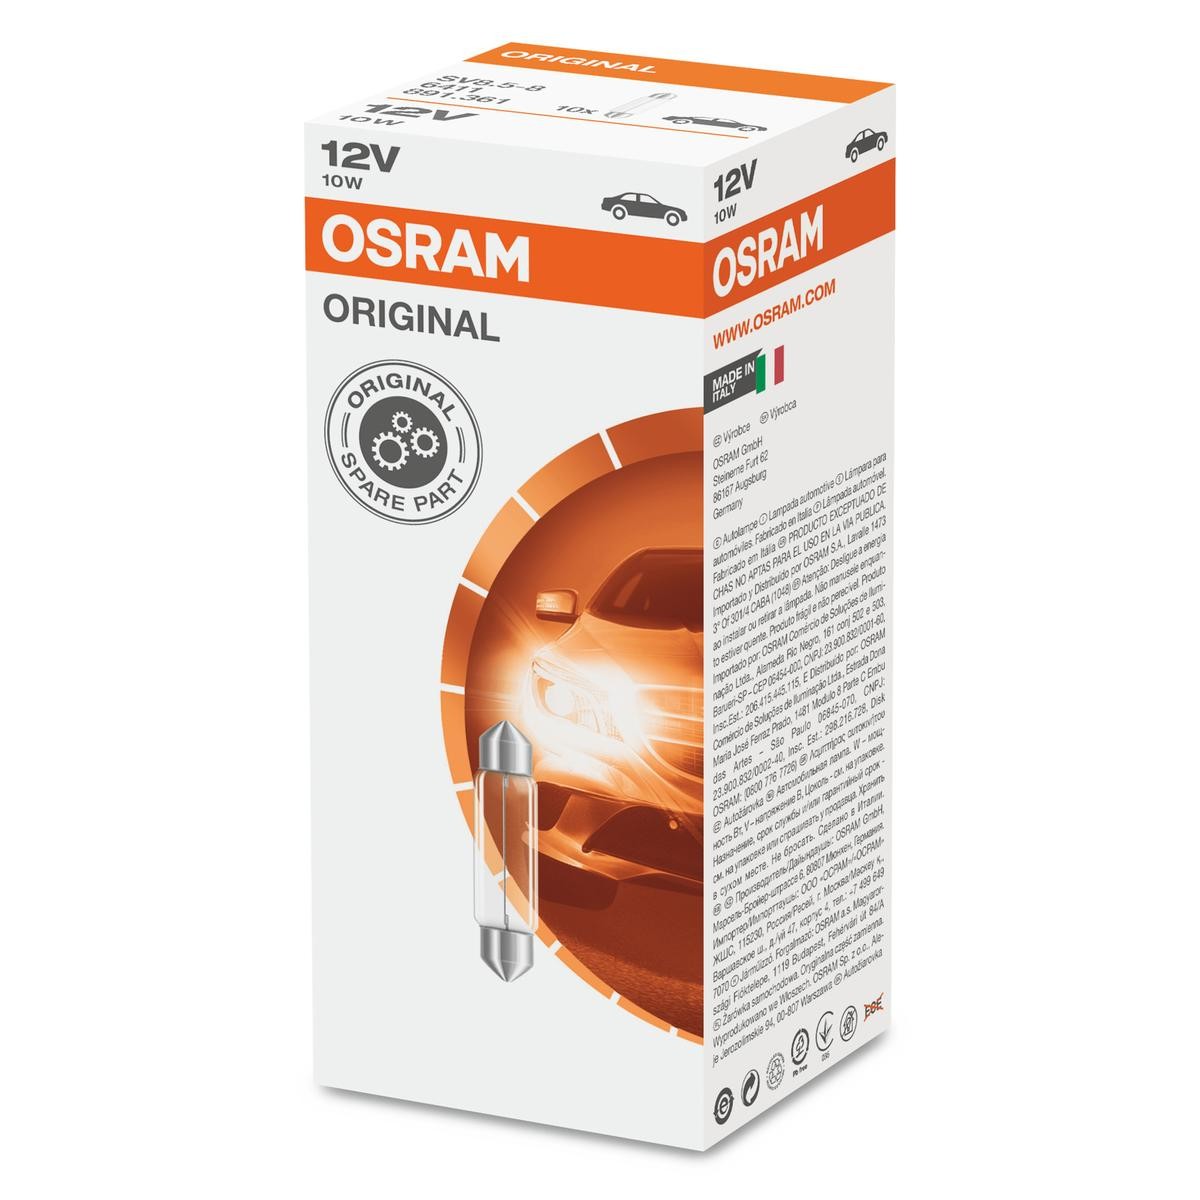 Proton ricambi originali OSRAM 6411